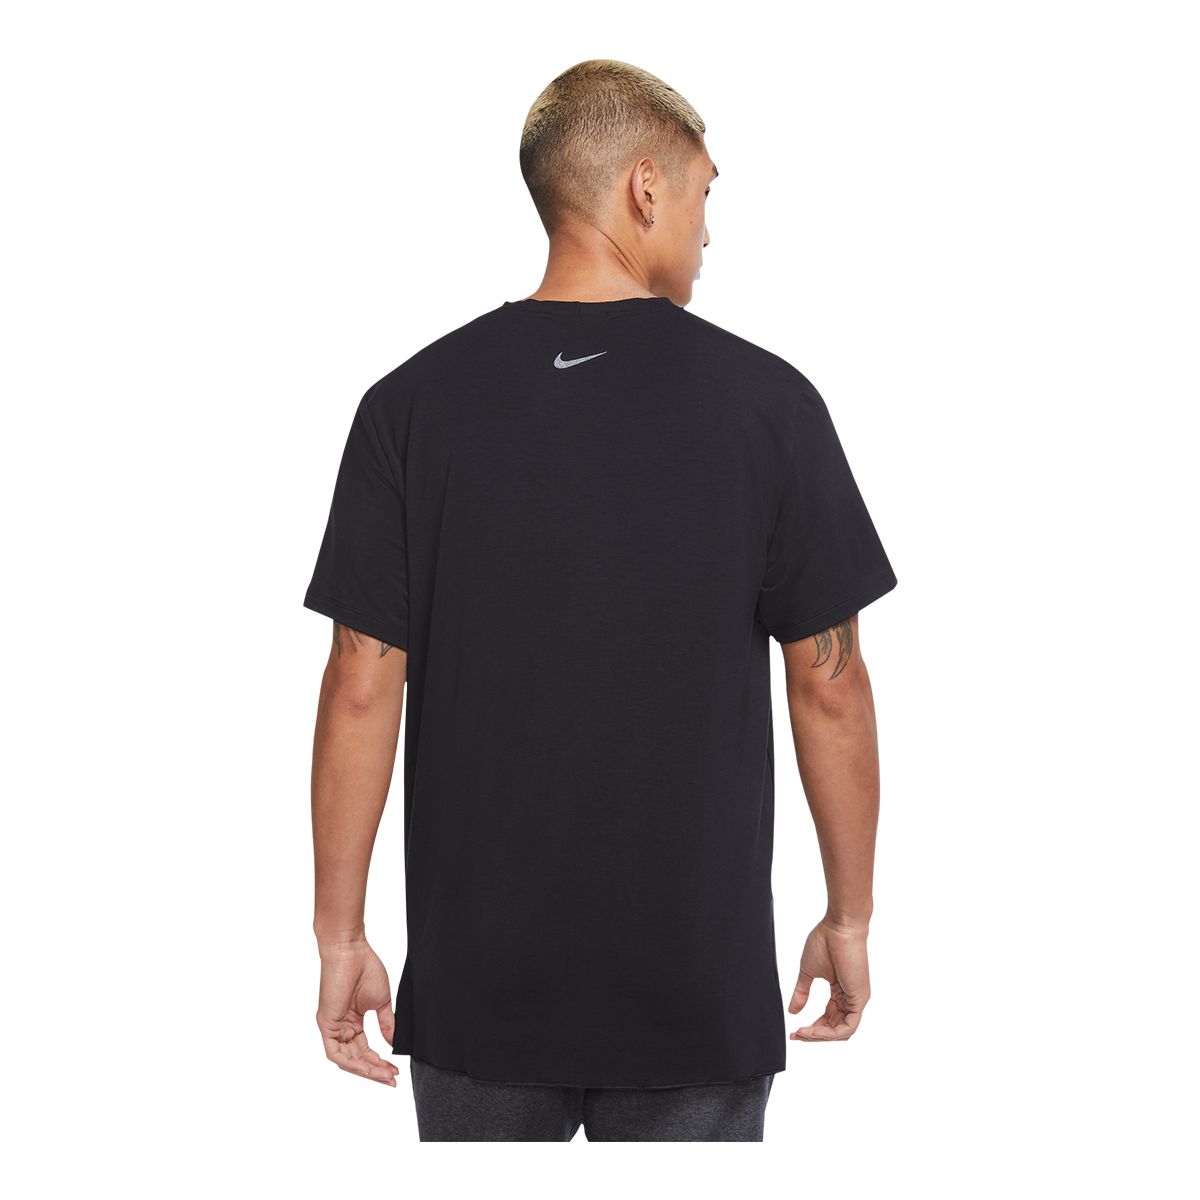 Men's Nike Yoga Dri-FIT Yoga Exercise Quick Dry Short Sleeve Blue Grey  T-Shirt BV4035-079